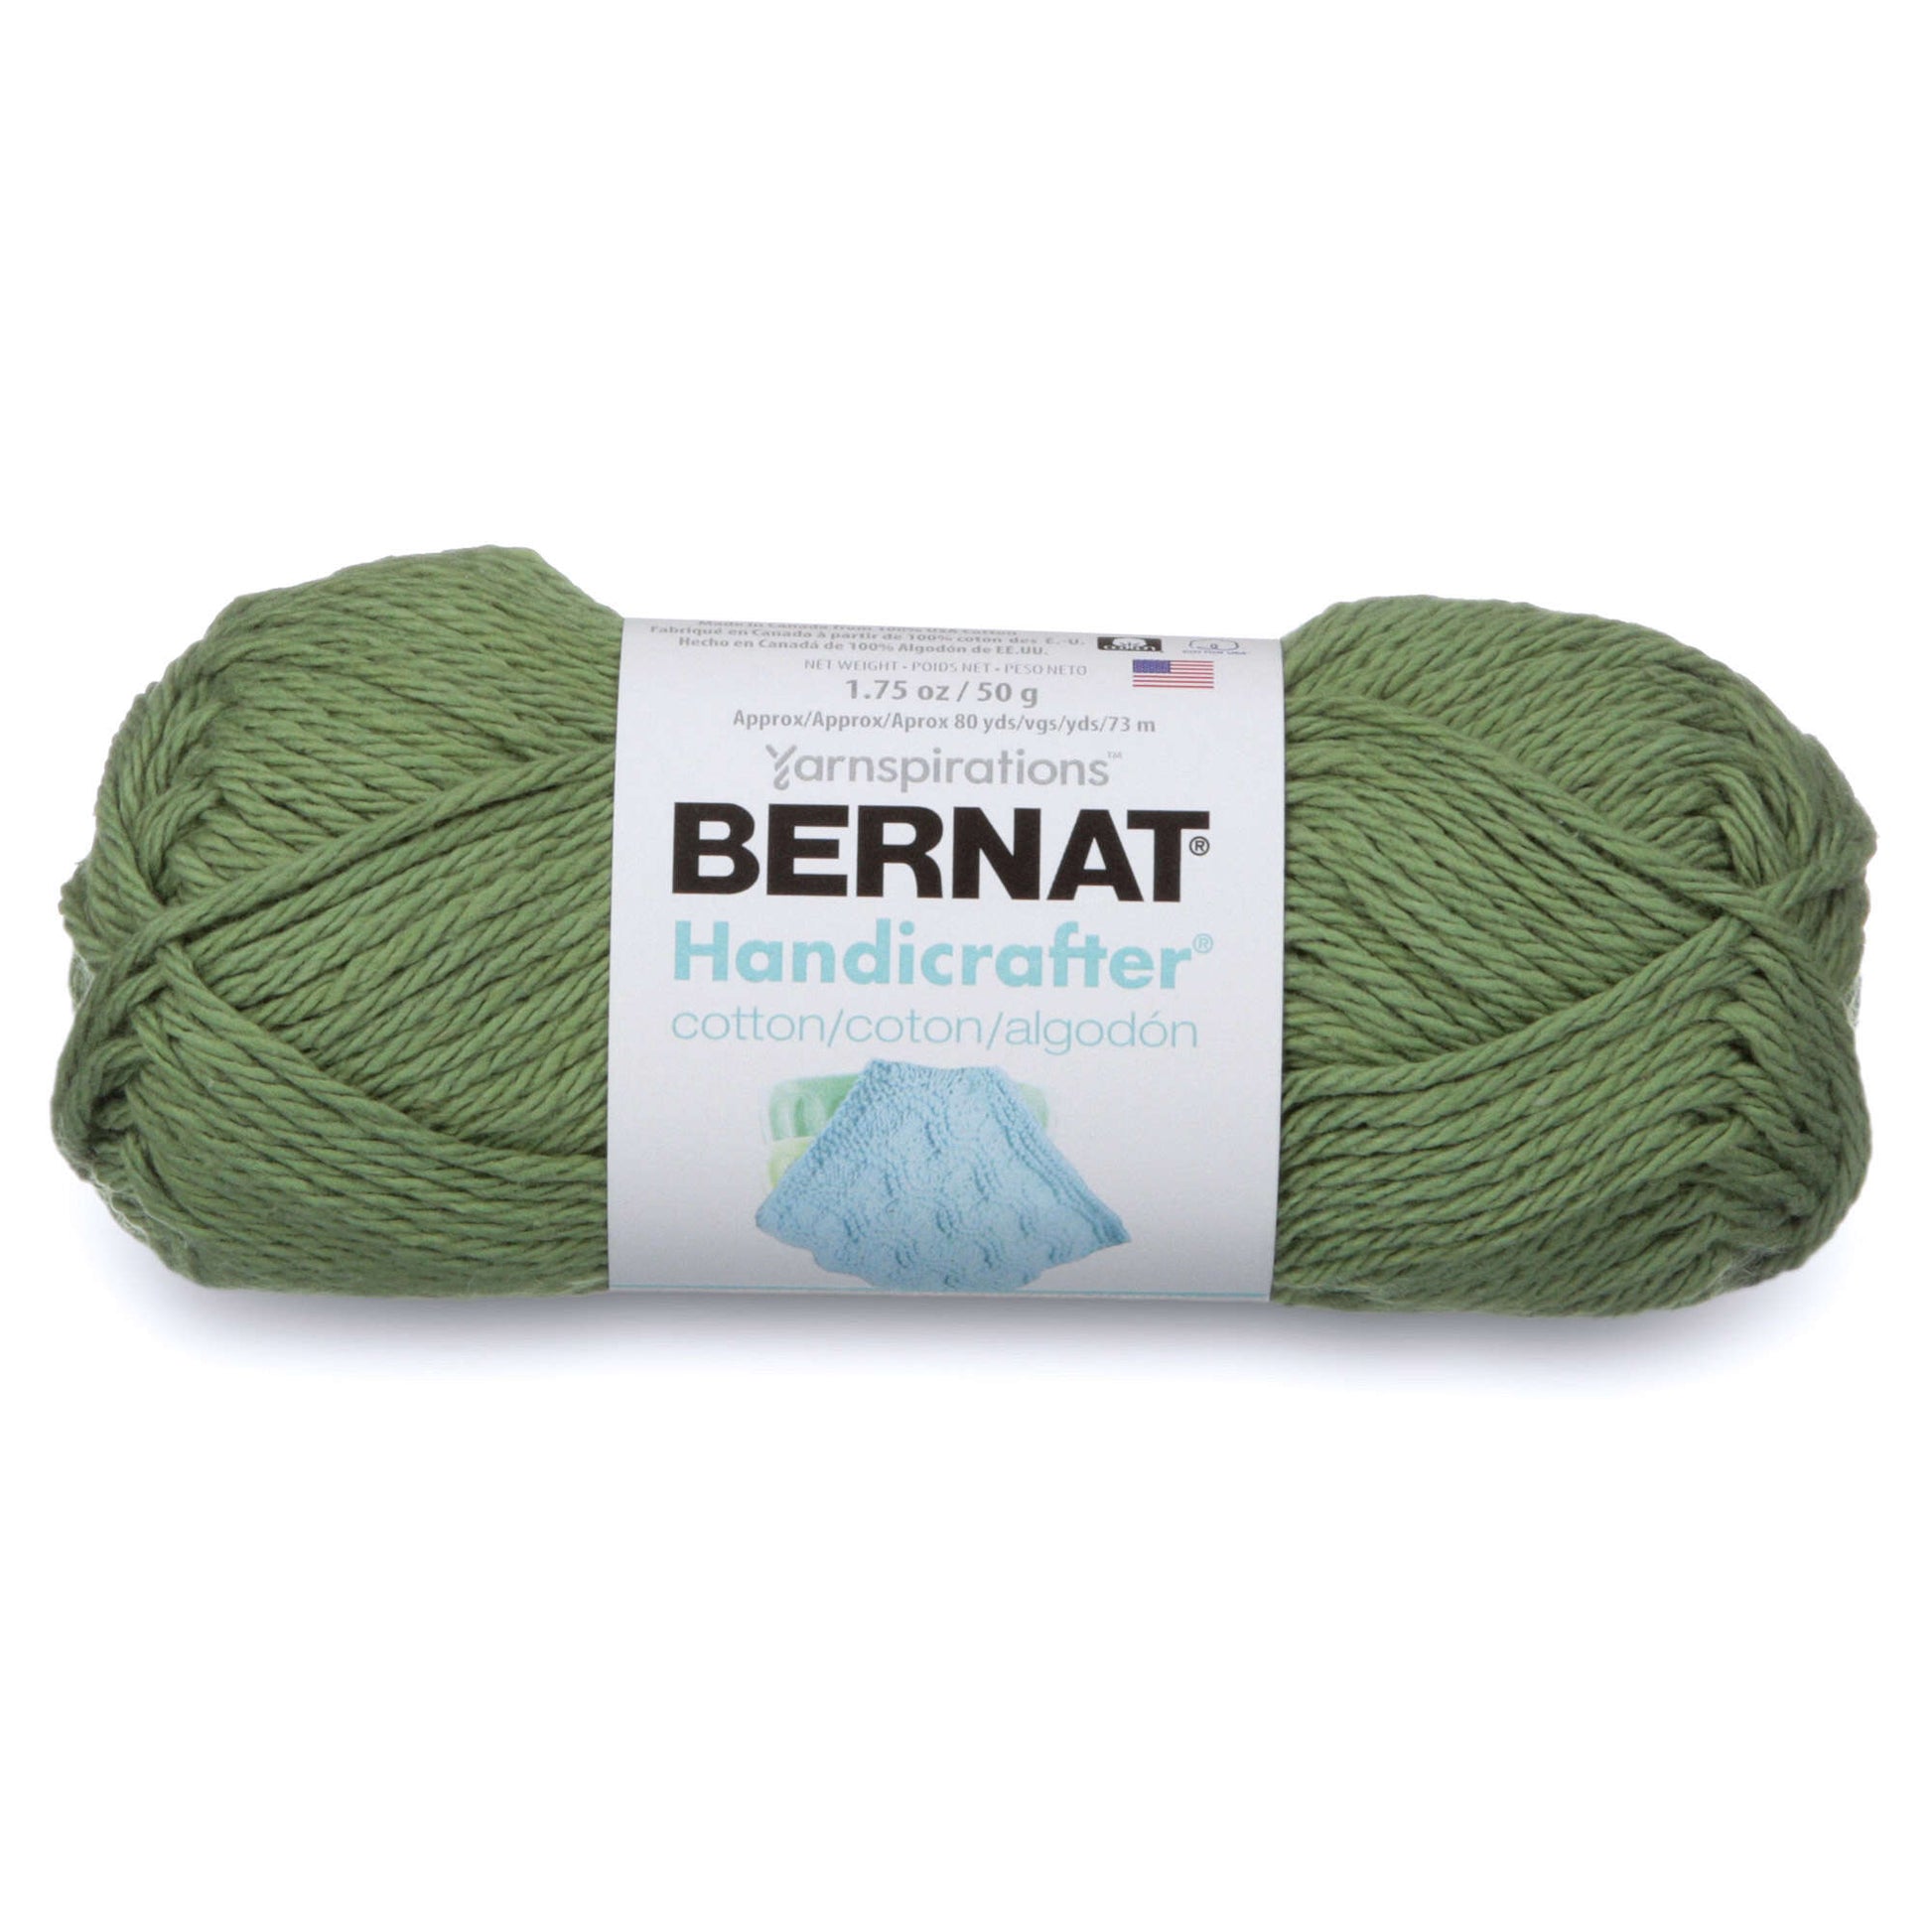 Bernat Handicrafter Cotton Yarn (400g/14oz), Yarnspirations